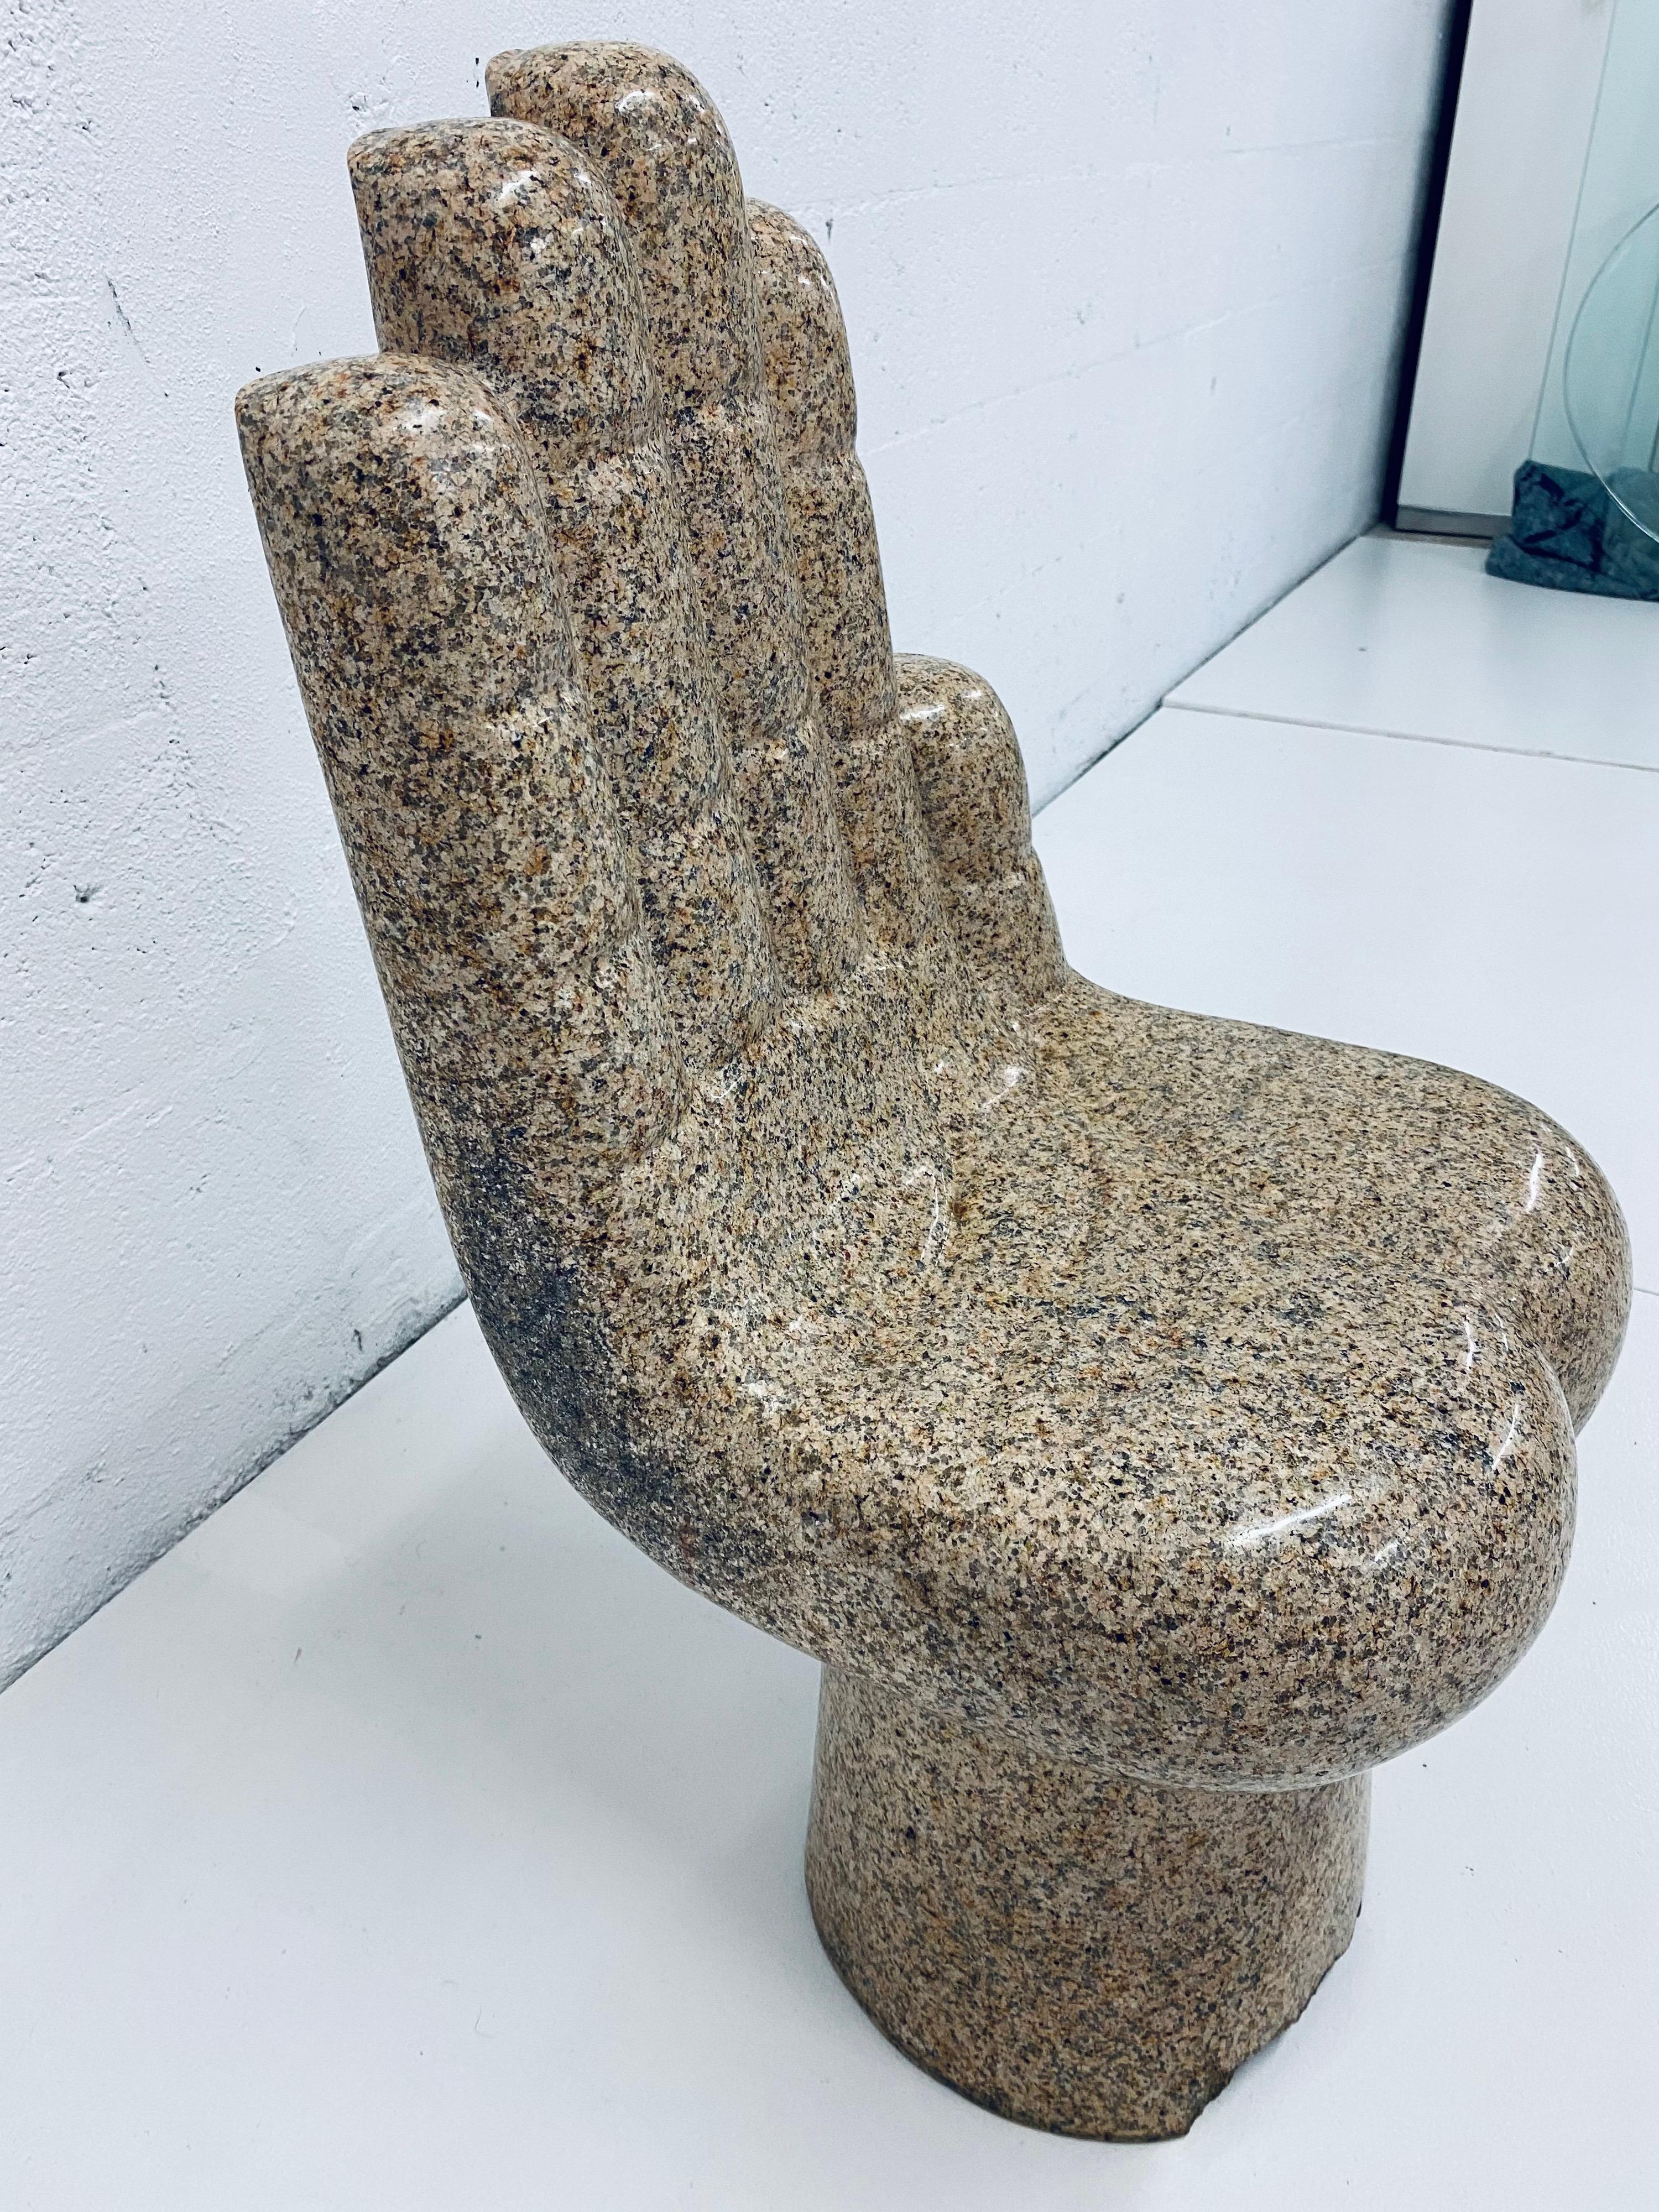 stone hand chair